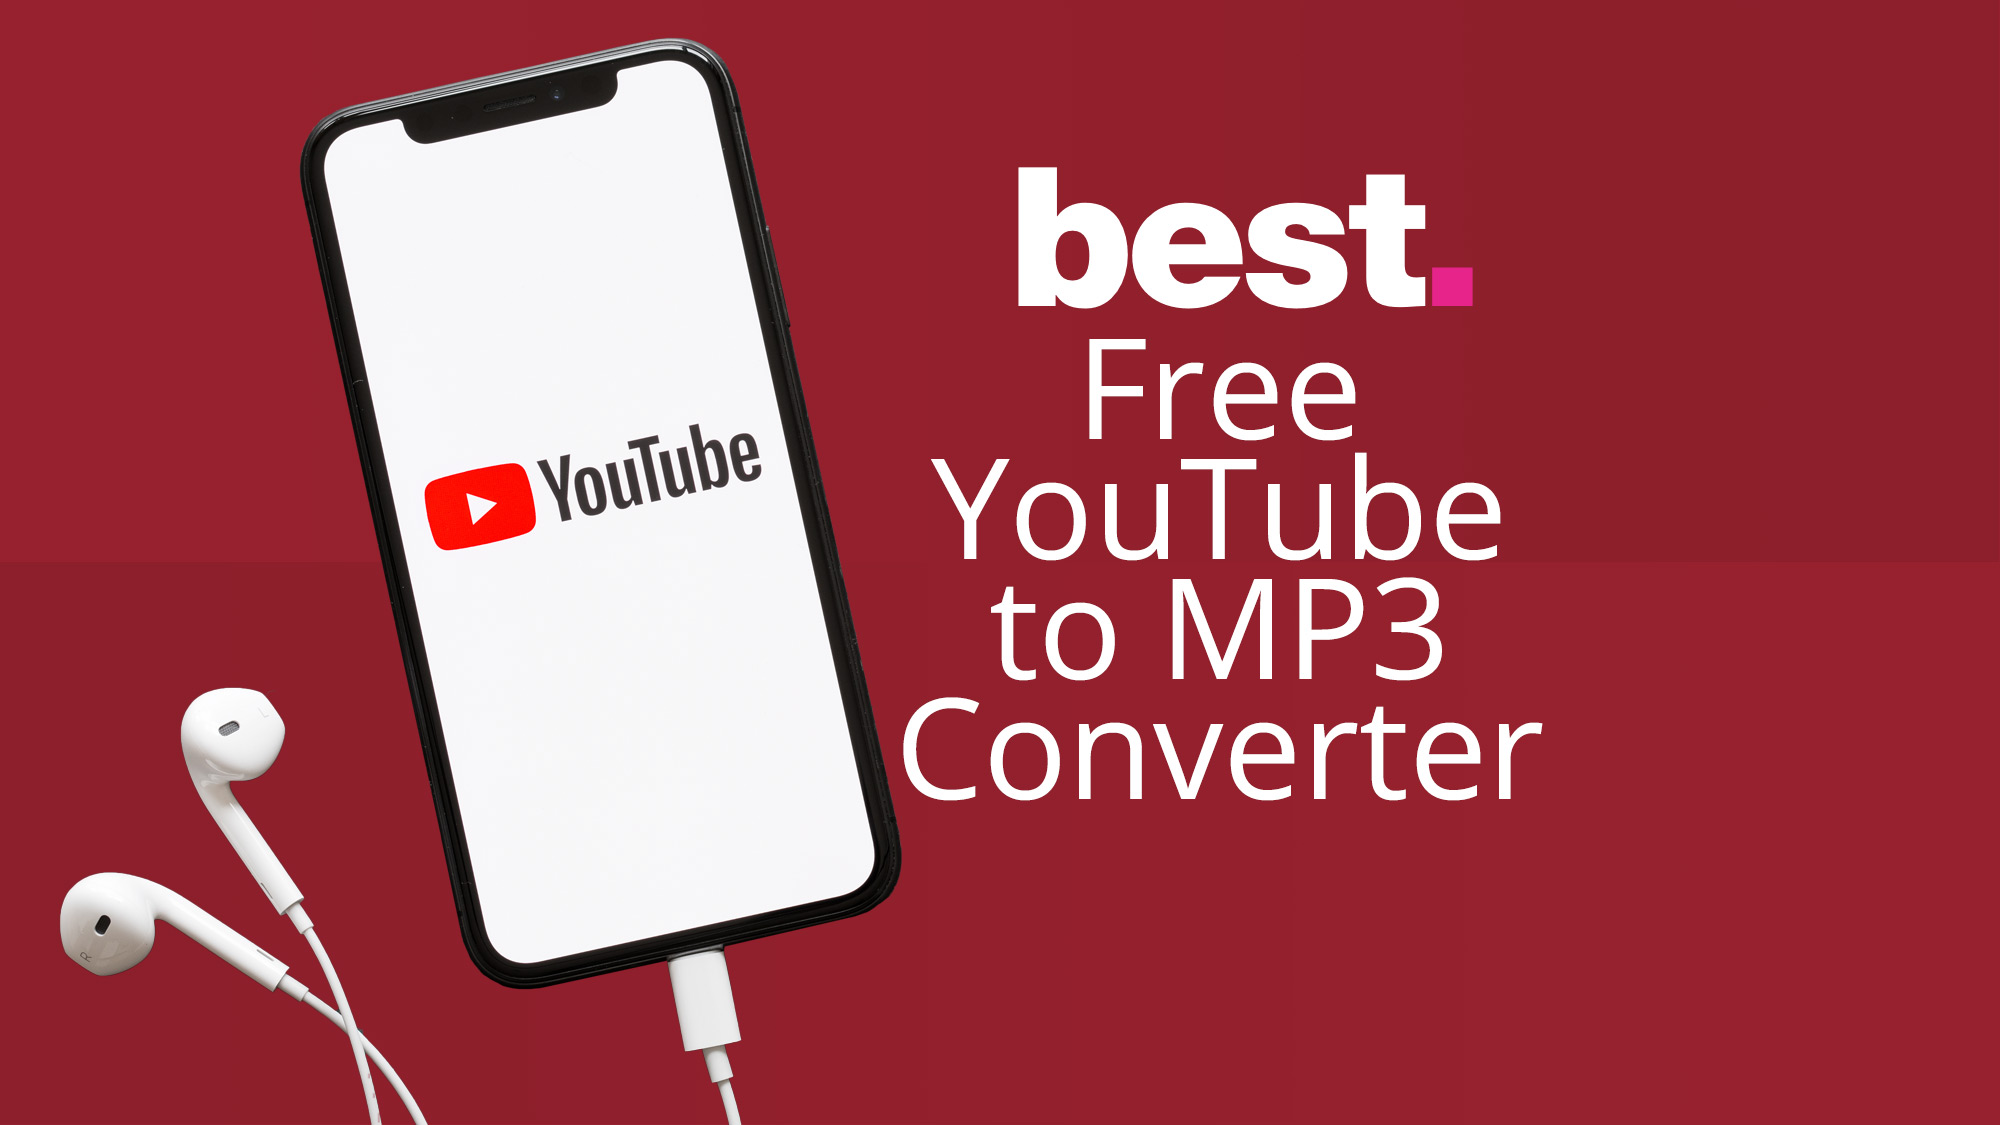 best youtube video to mp3 converter free program